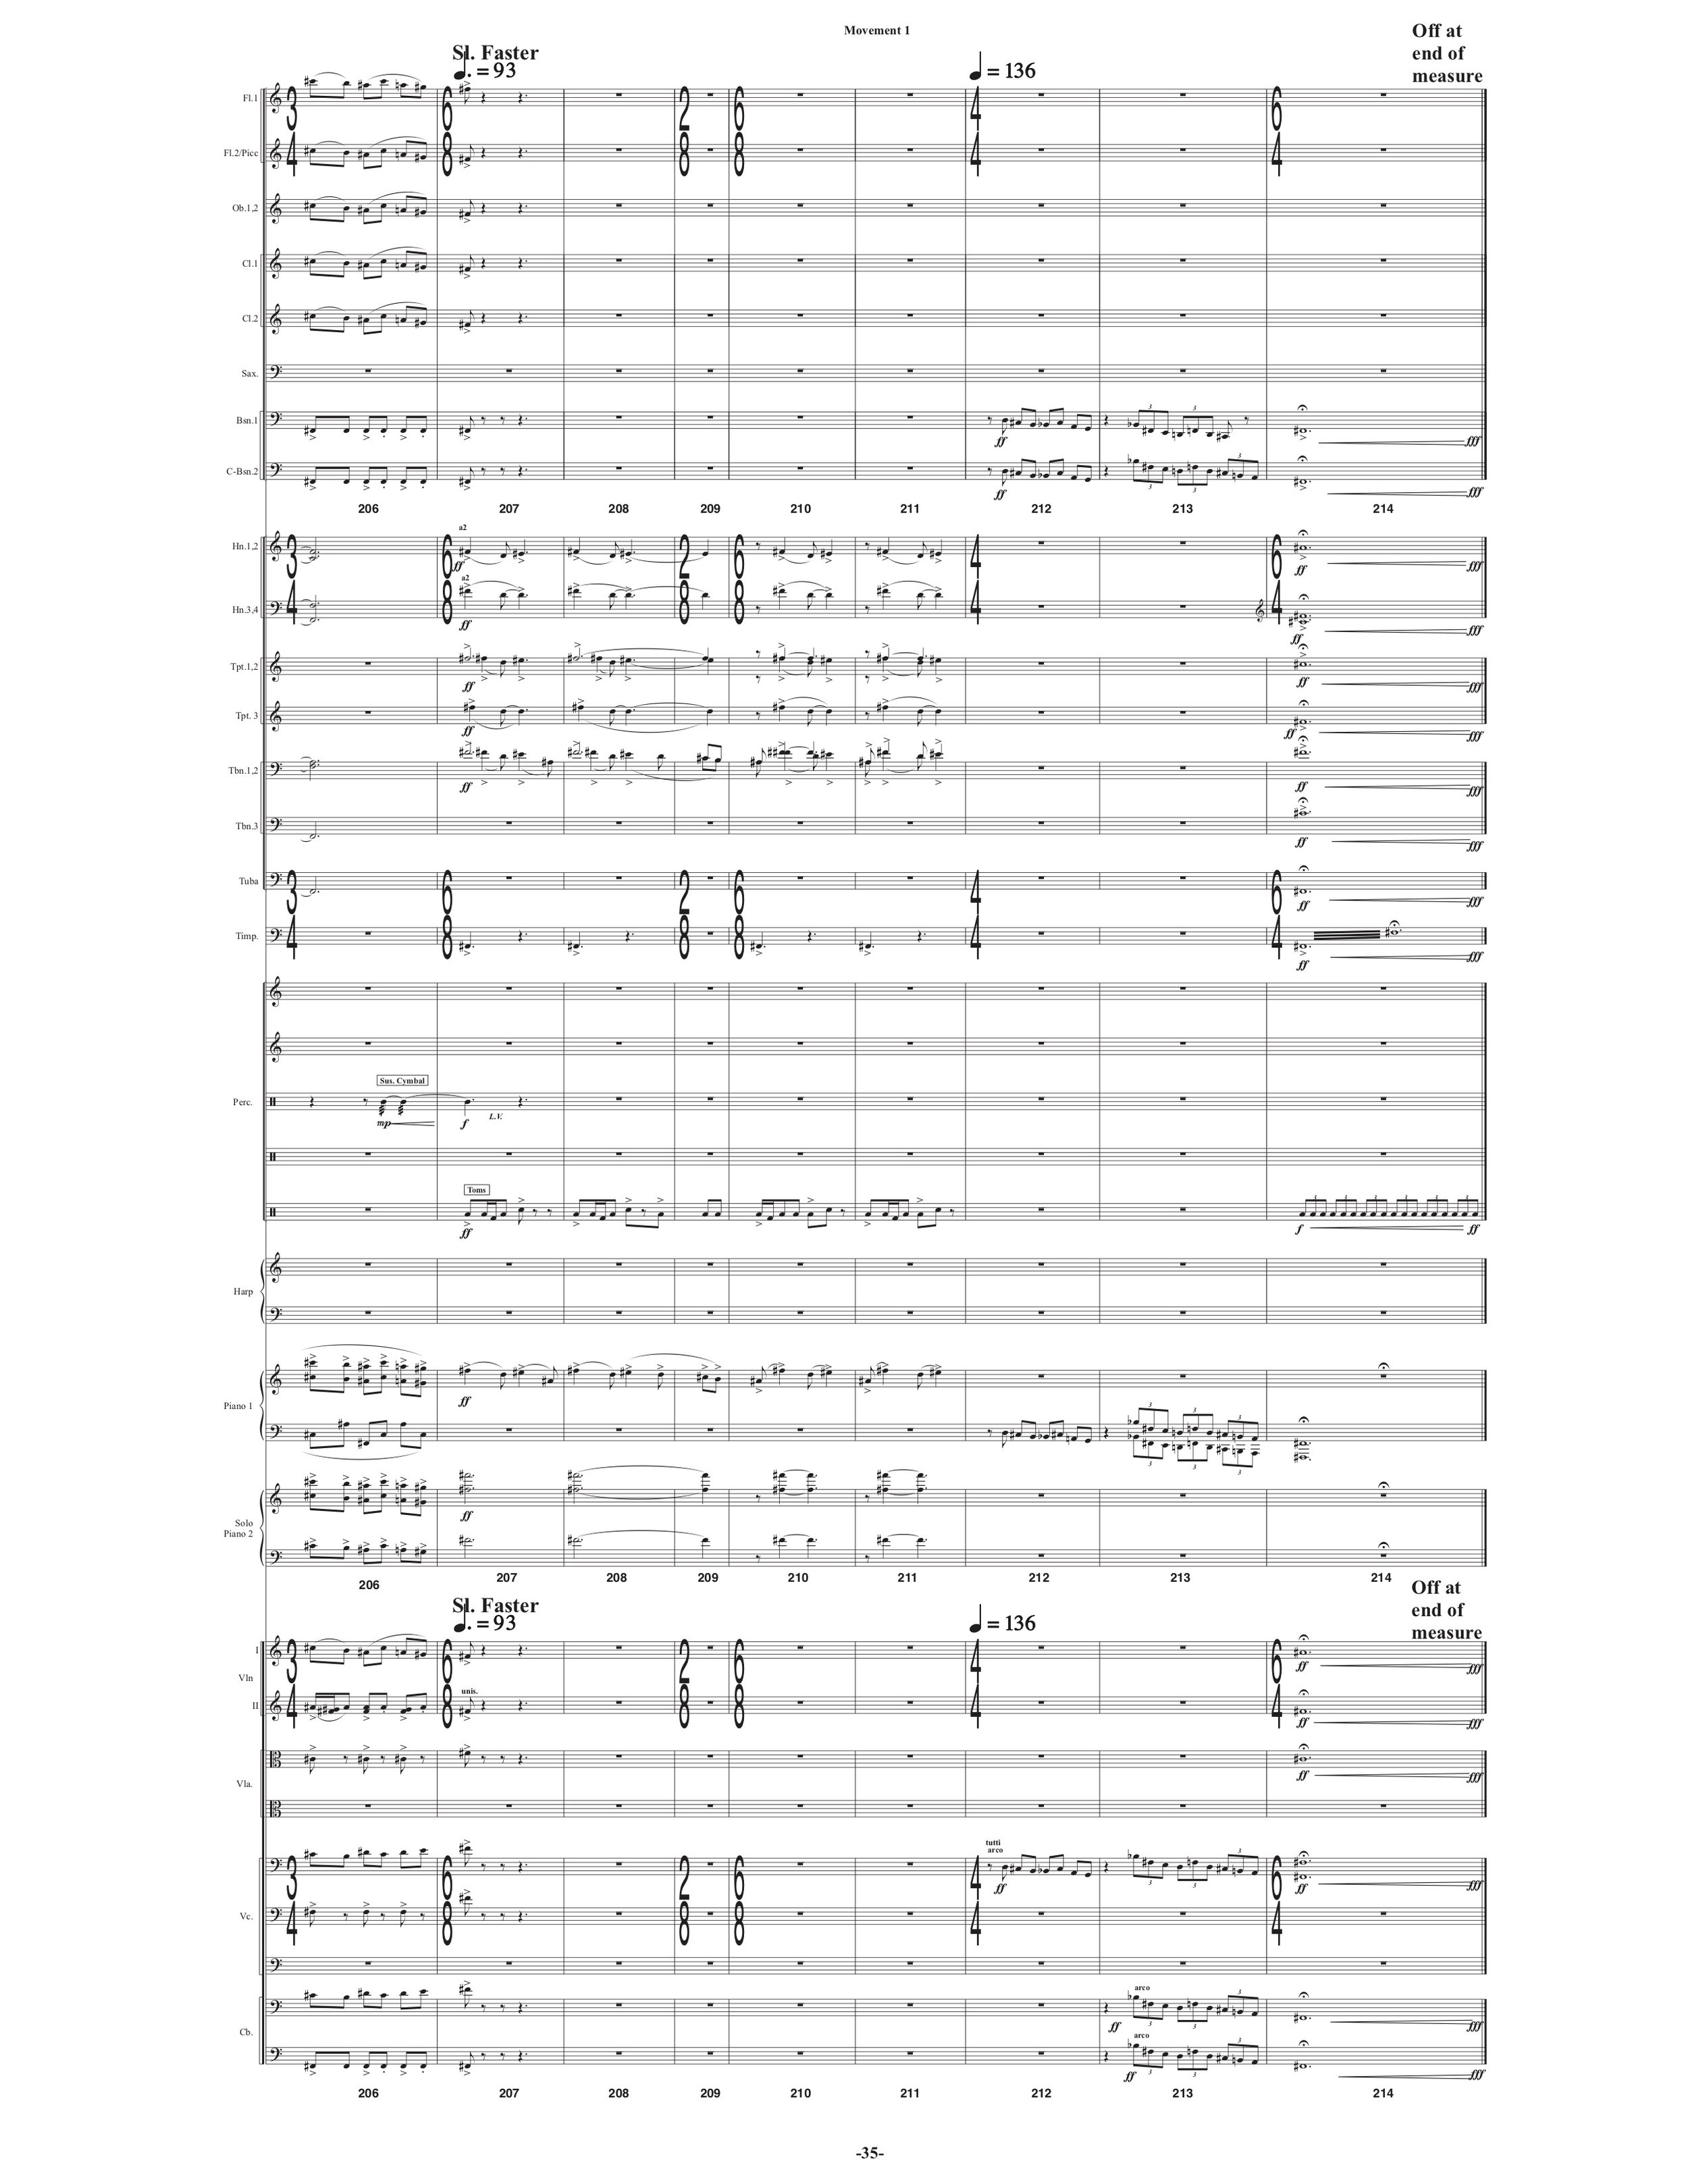 Symphony_Orch & 2 Pianos p40.jpg